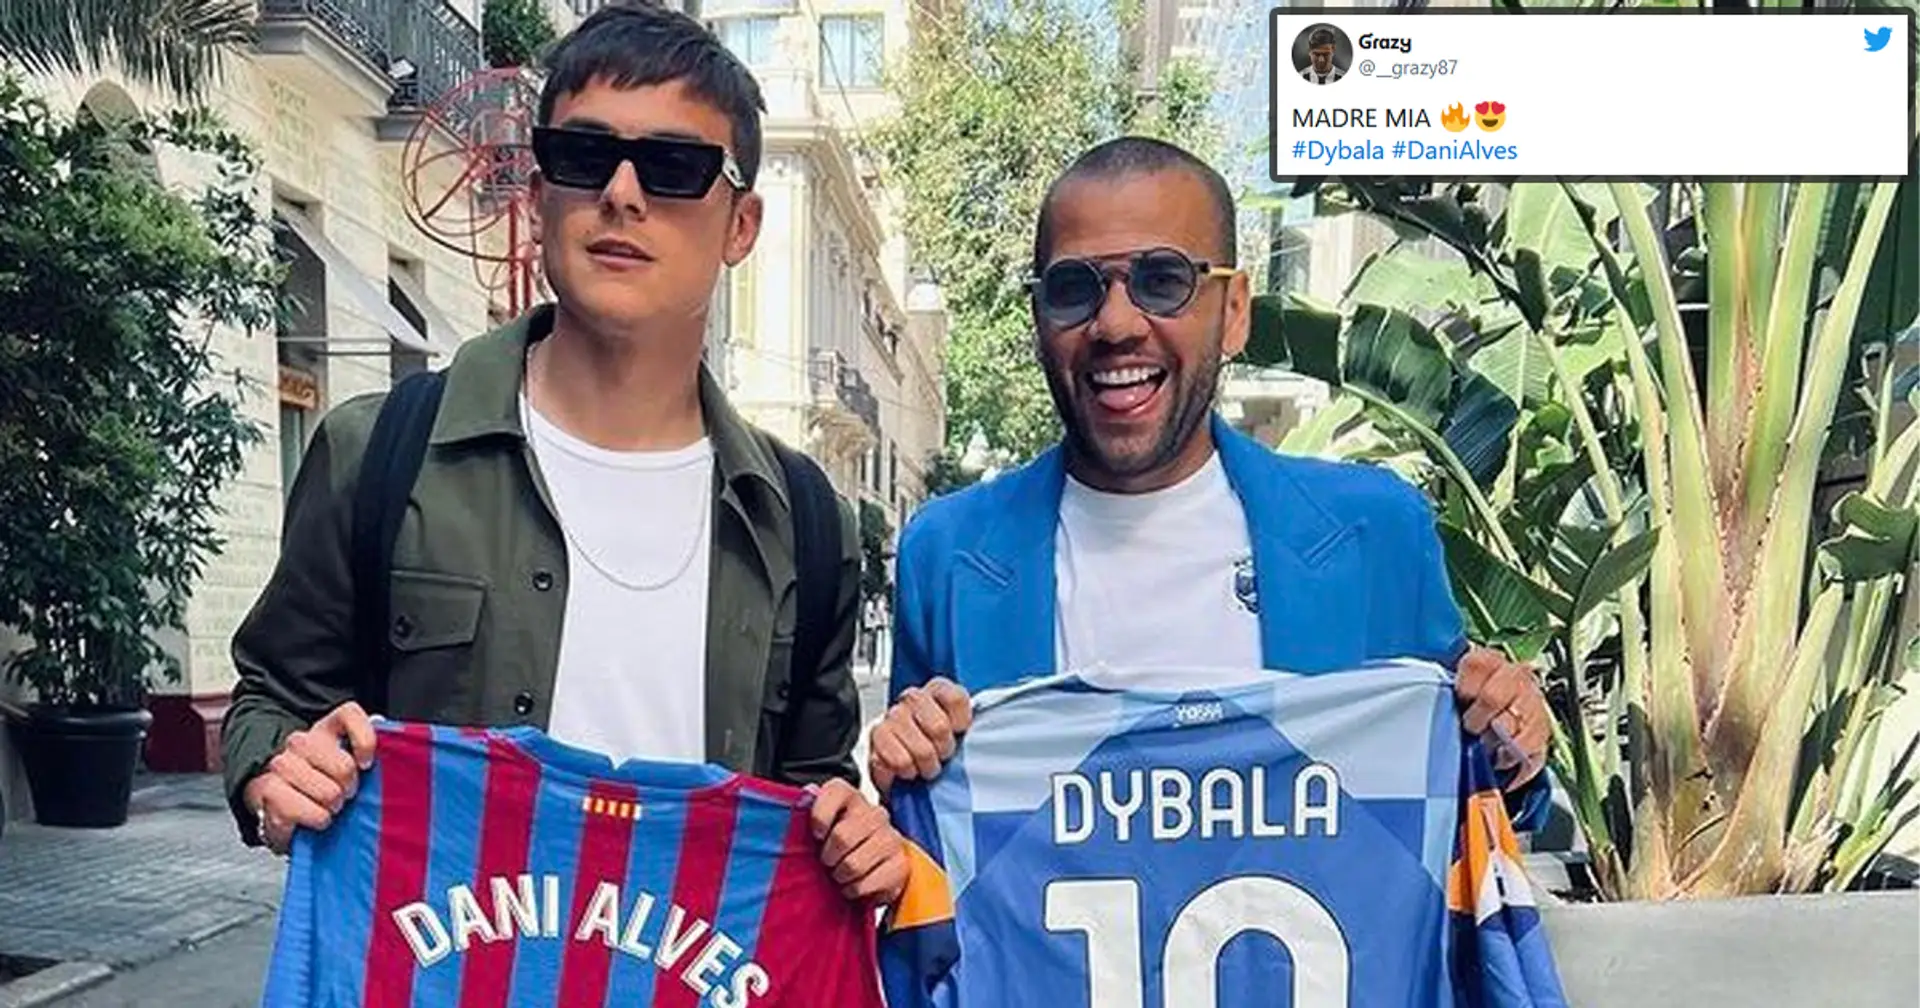 "Quanto mi gasano!": Dybala e Dani Alves insieme infiammano gli animi dei tifosi sui social